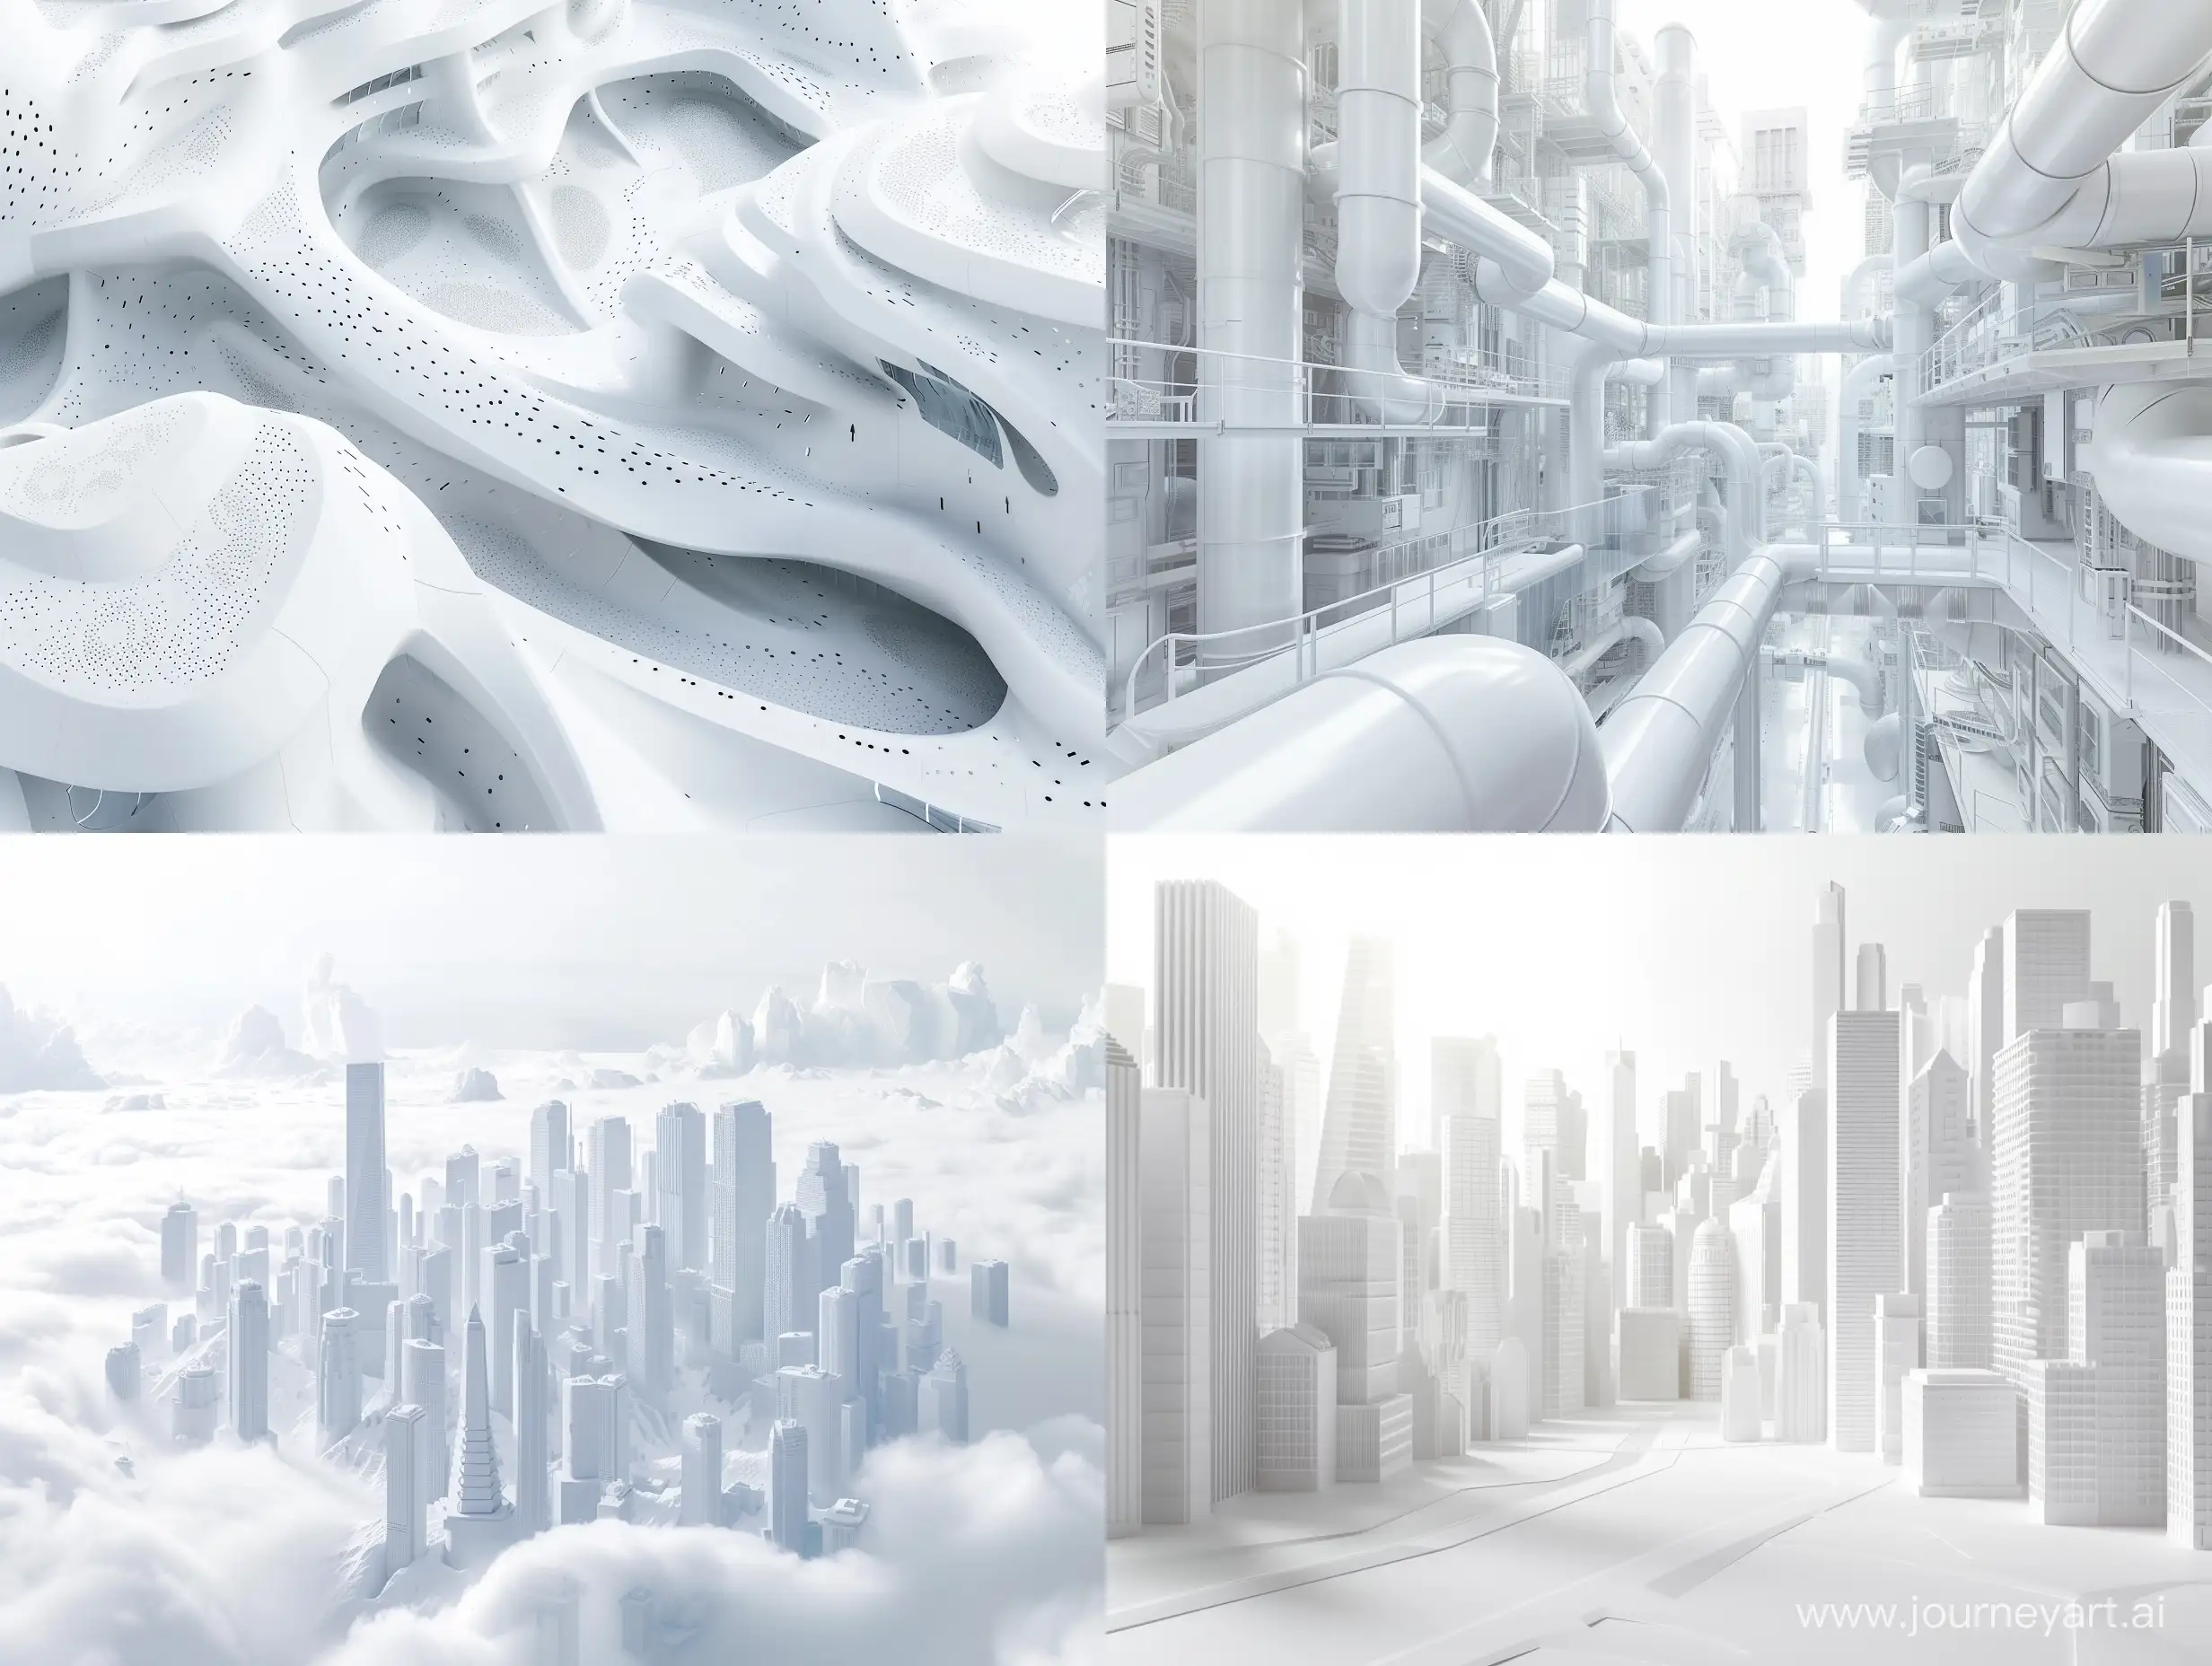 Futuristic-White-Innovation-Cityscape-with-Advanced-Technologies